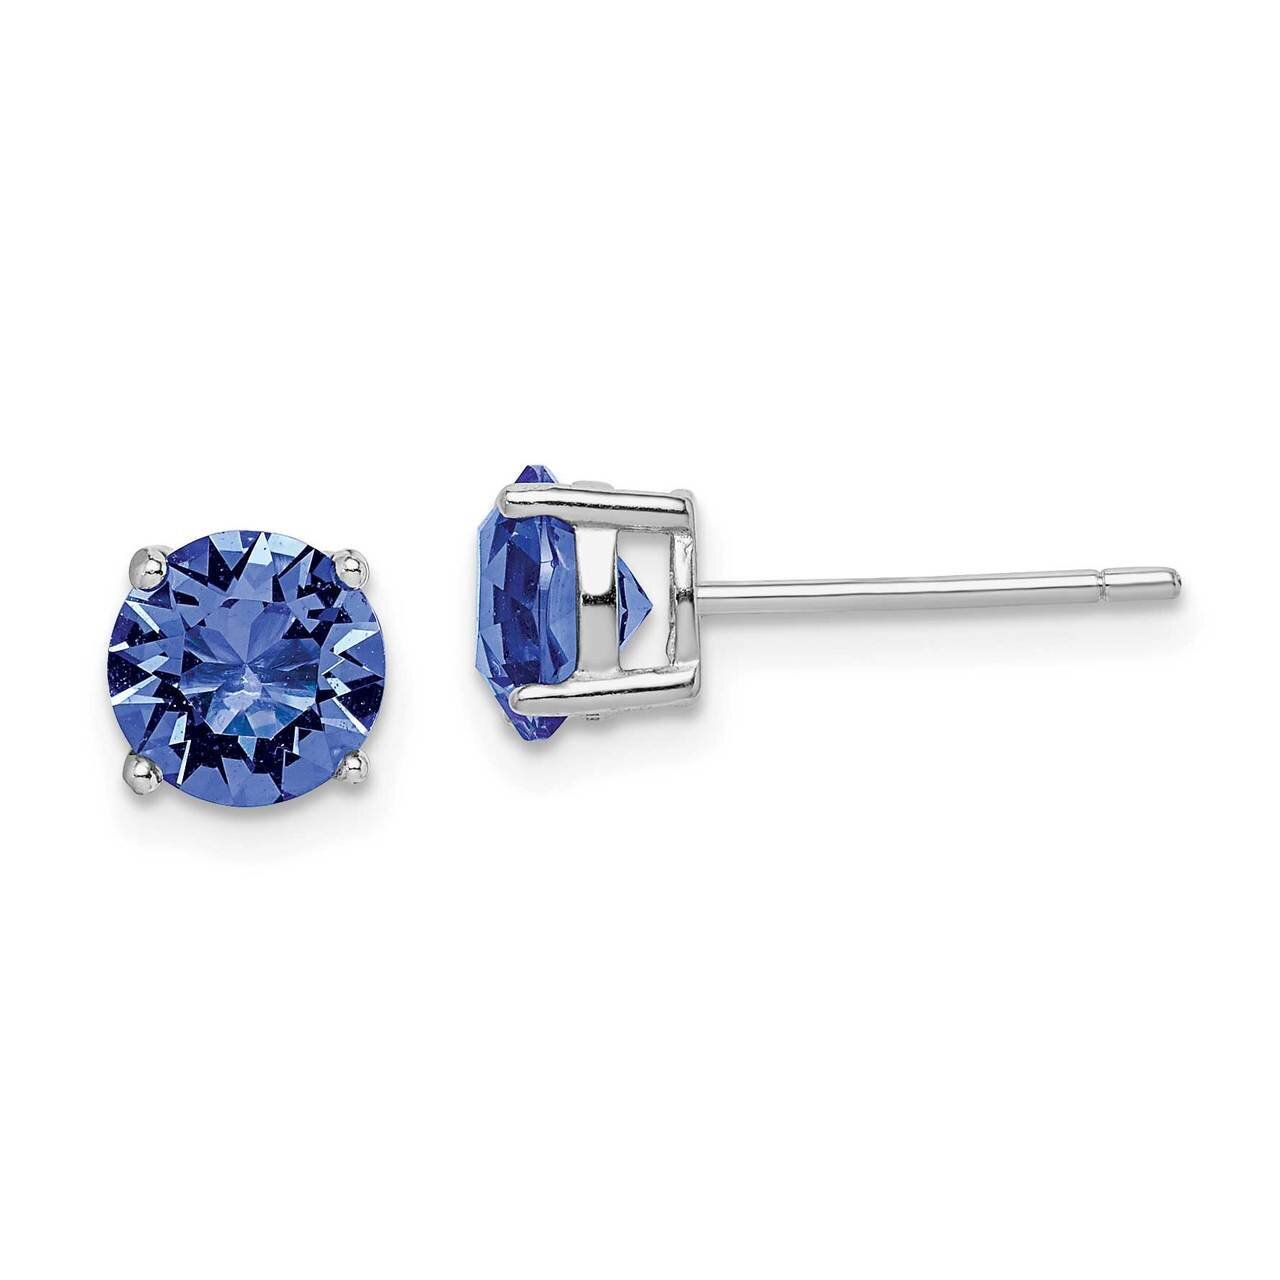 Blue Swarovski Crystal Birthstone Earrings Sterling Silver Rhodium-plated QE14067SEP